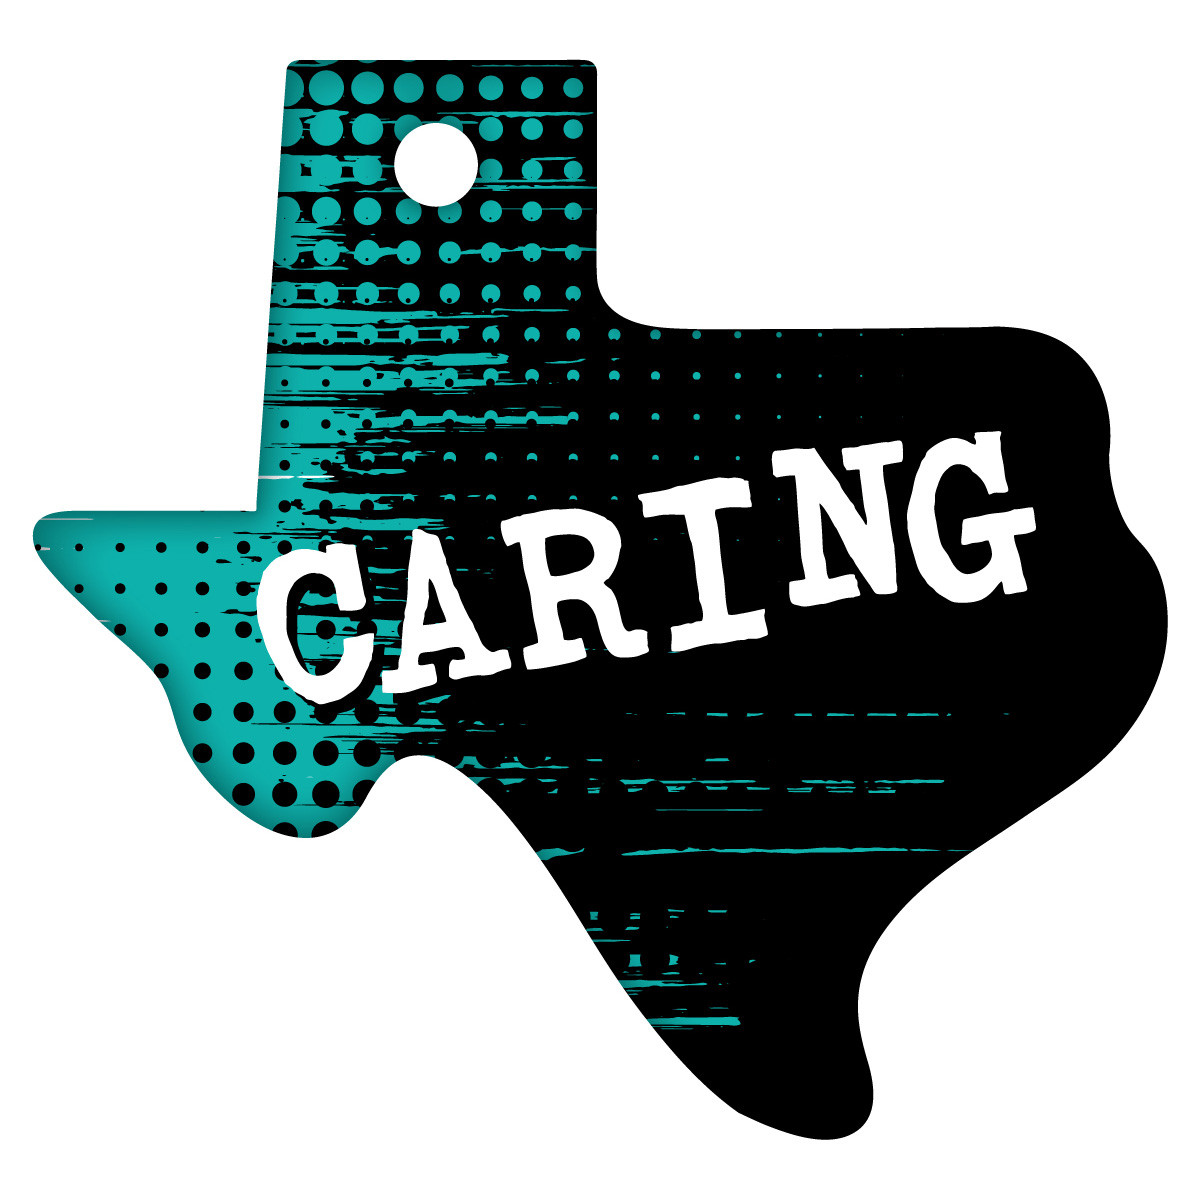 Texas Character Traits Brag Tags - Caring